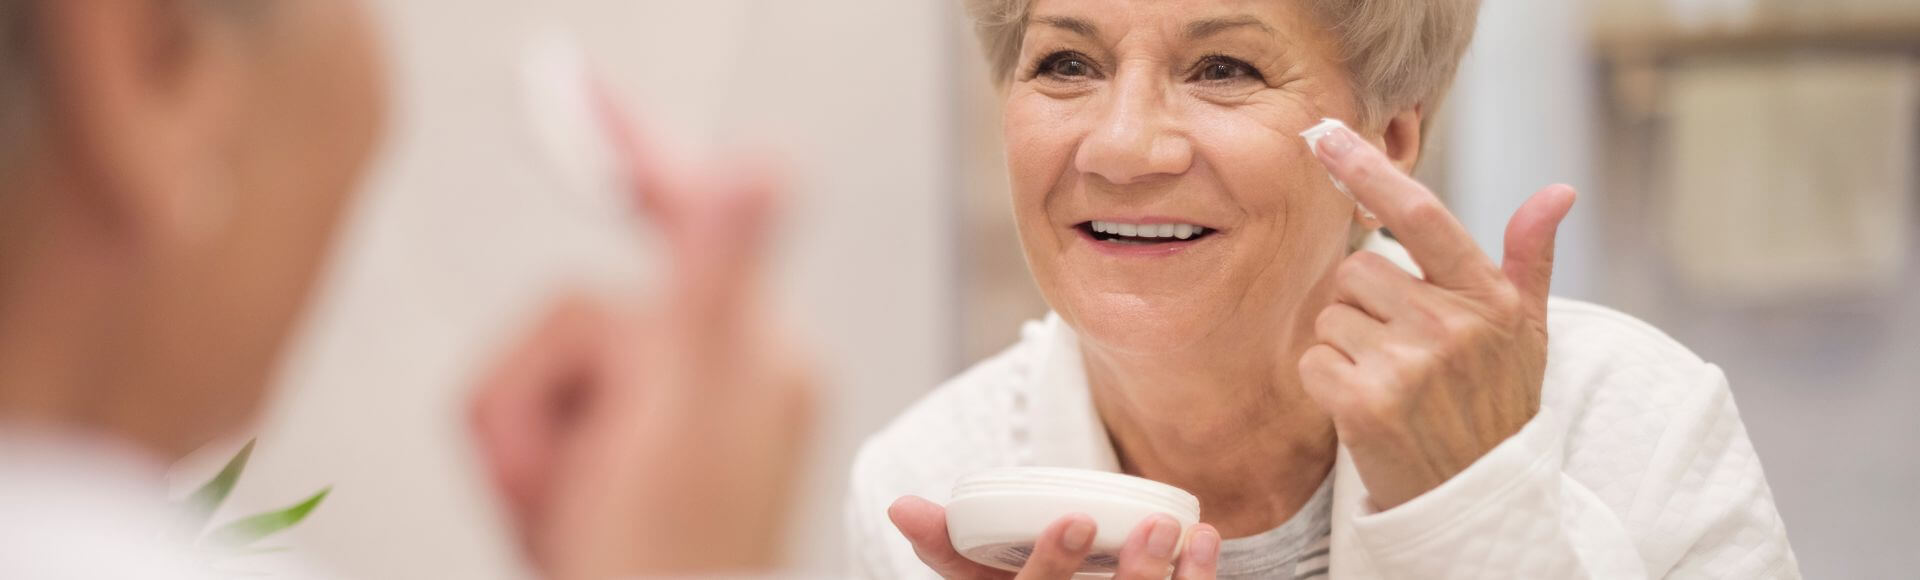 Skin Care For Older Women: 6 Essential Tips